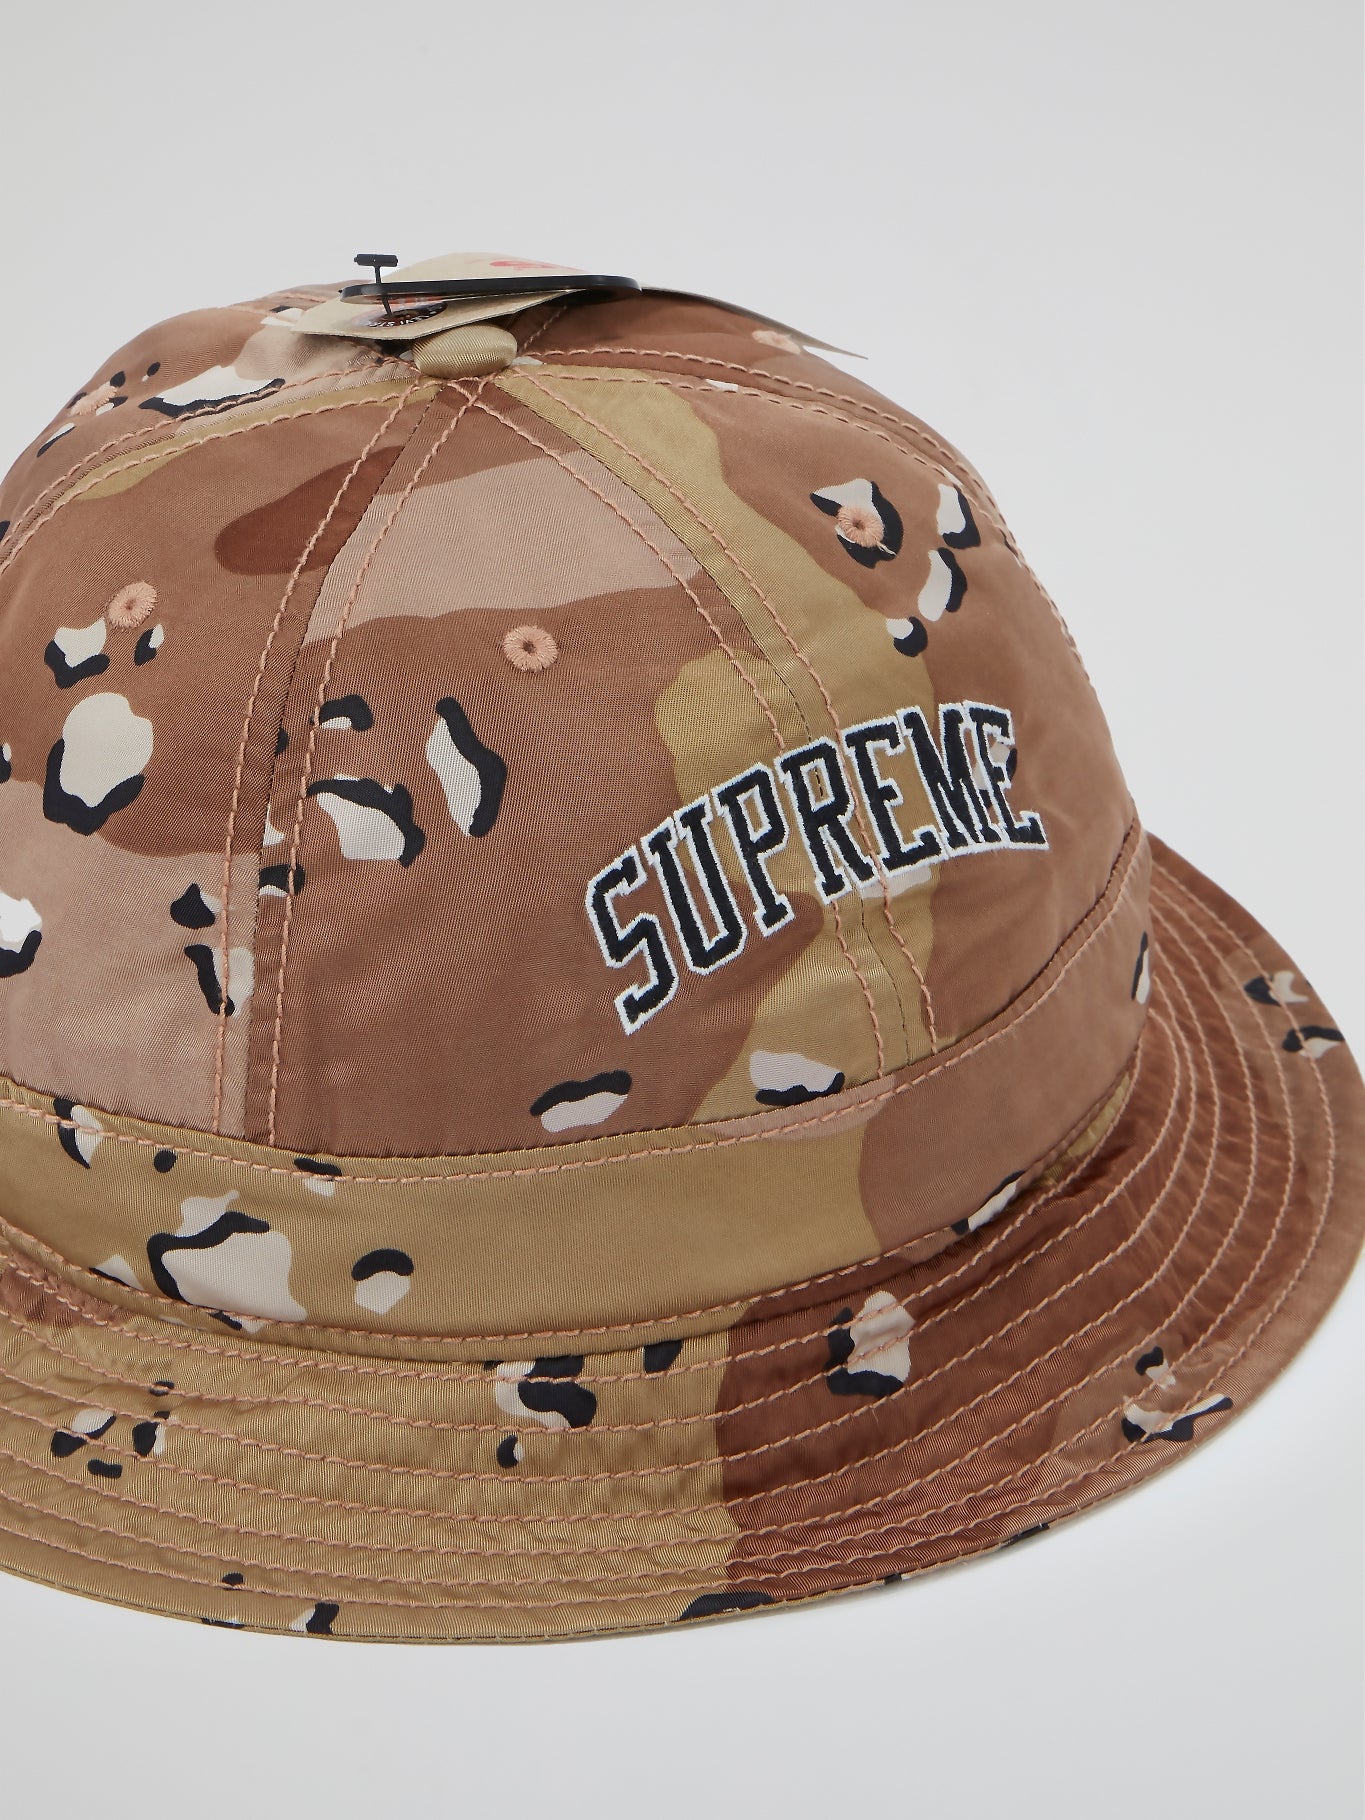 Supreme X Levis Camo Bucket Hat